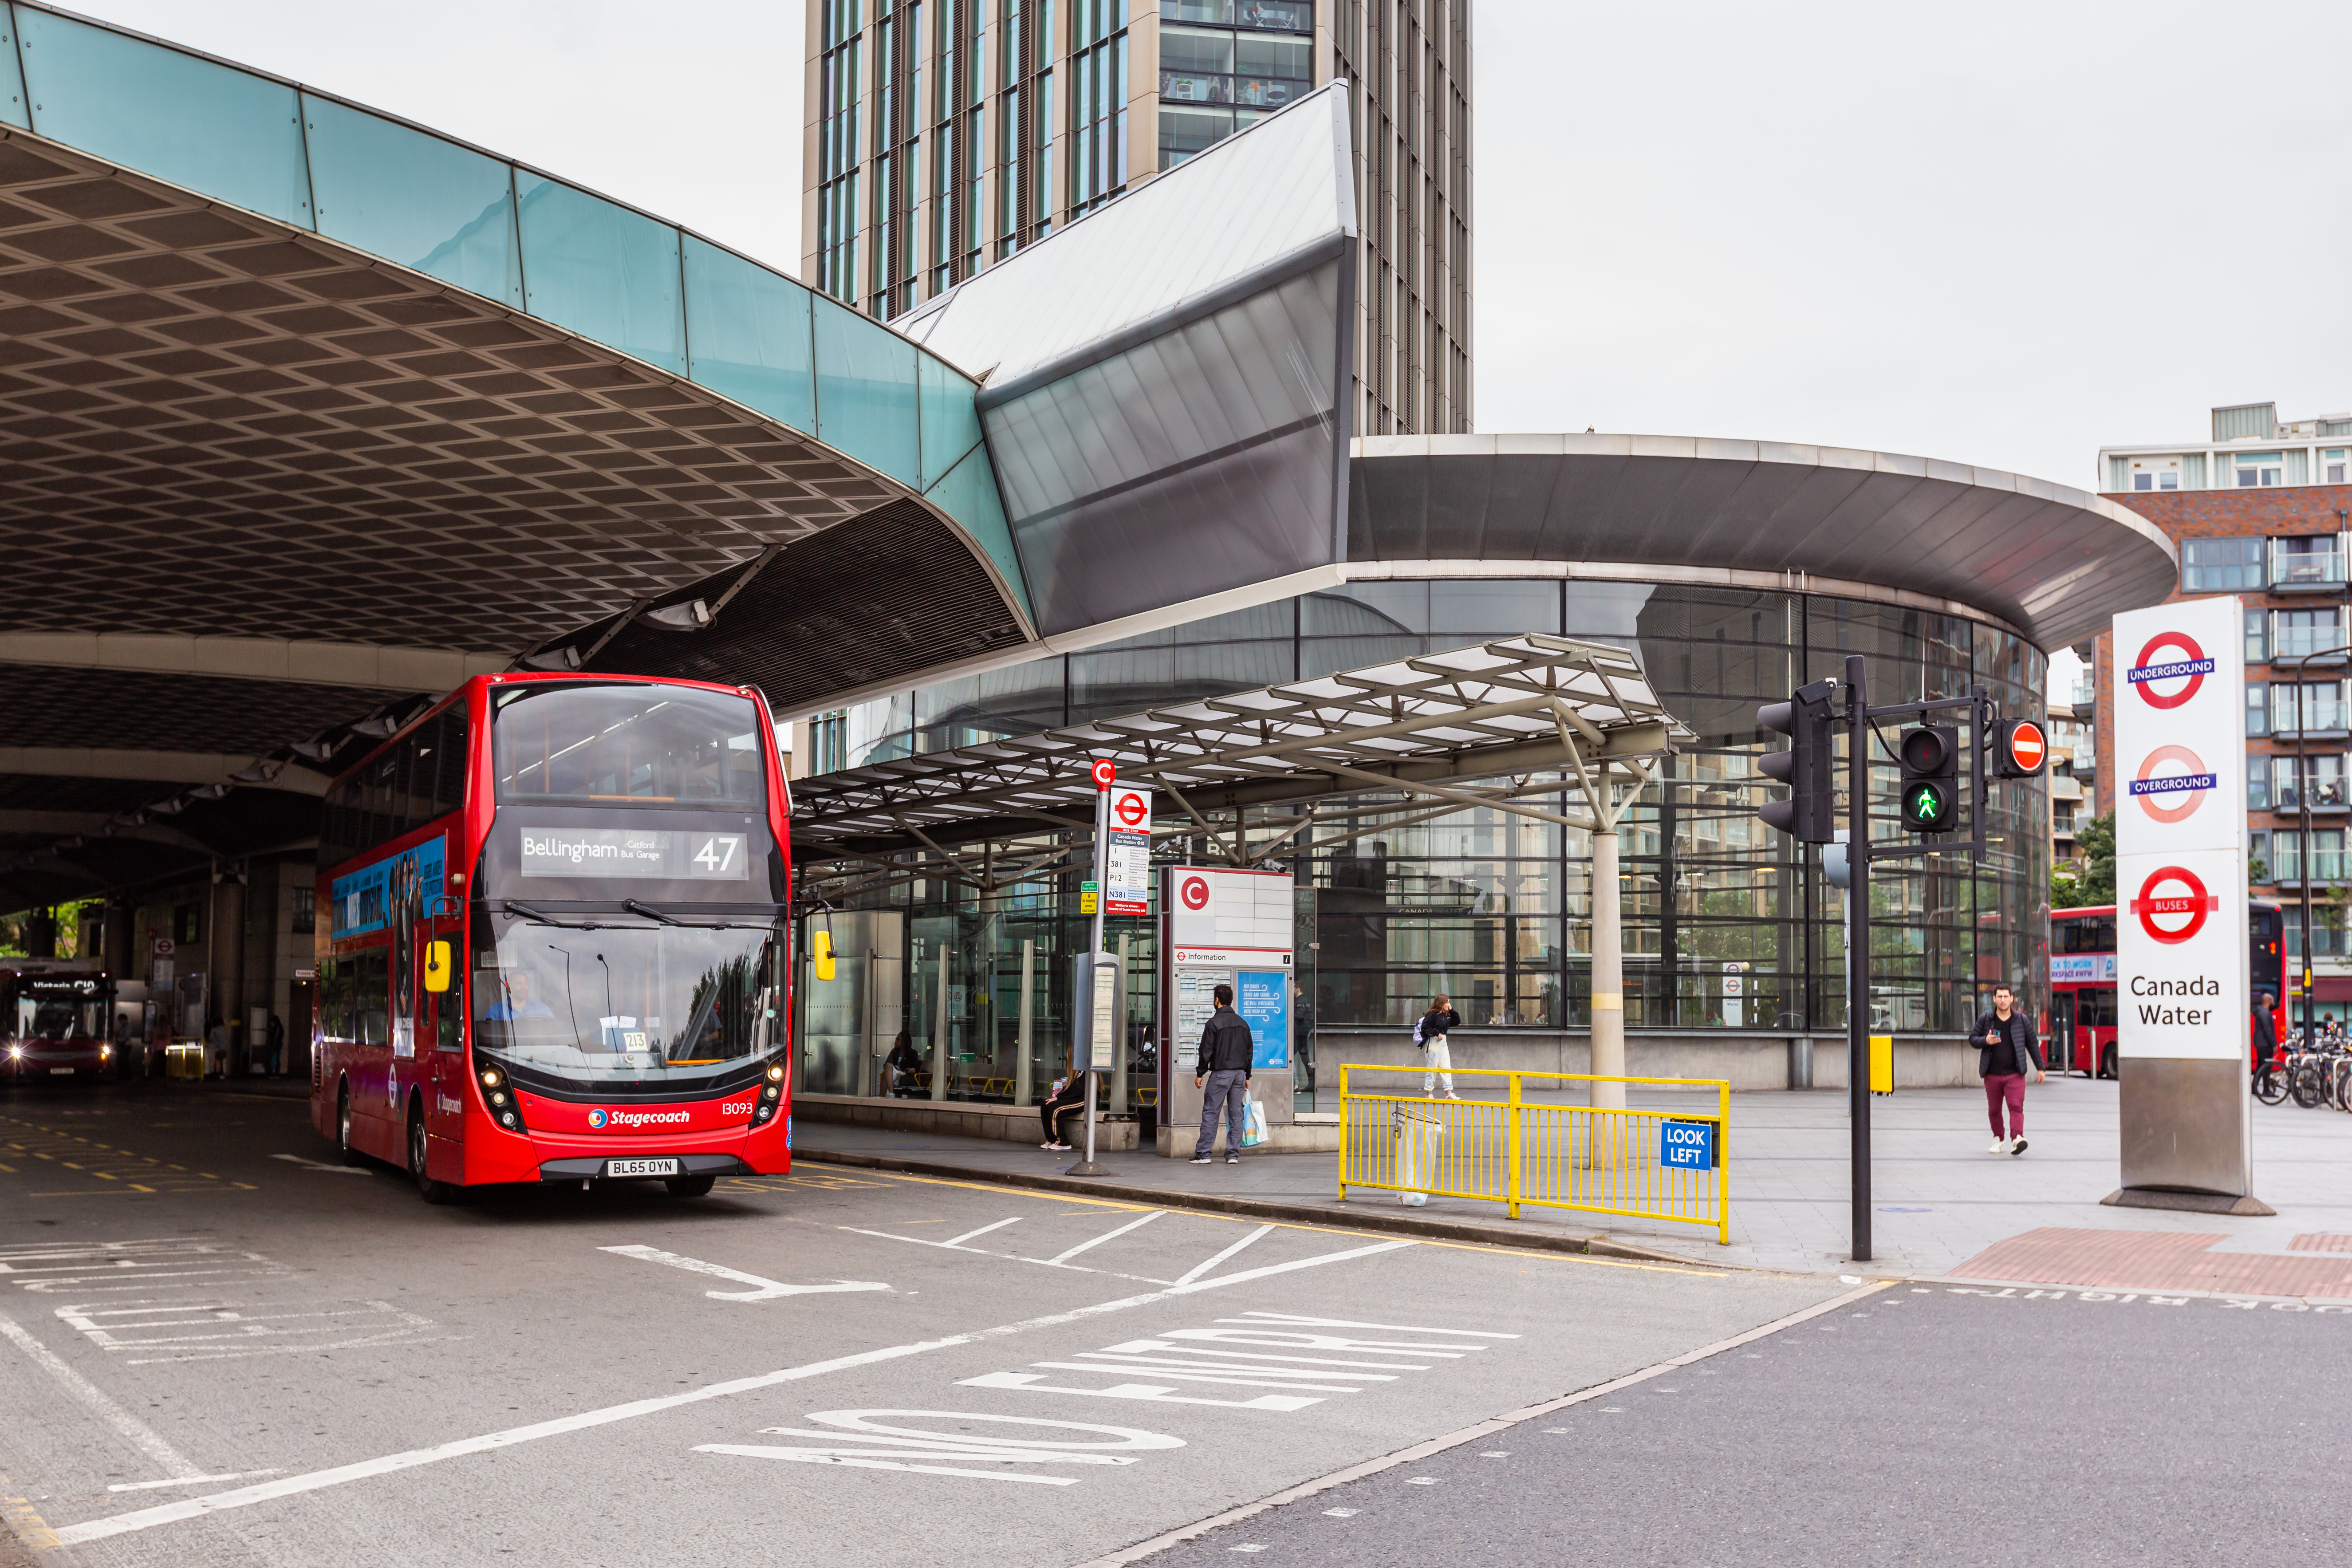 London buses face potential 20% cut